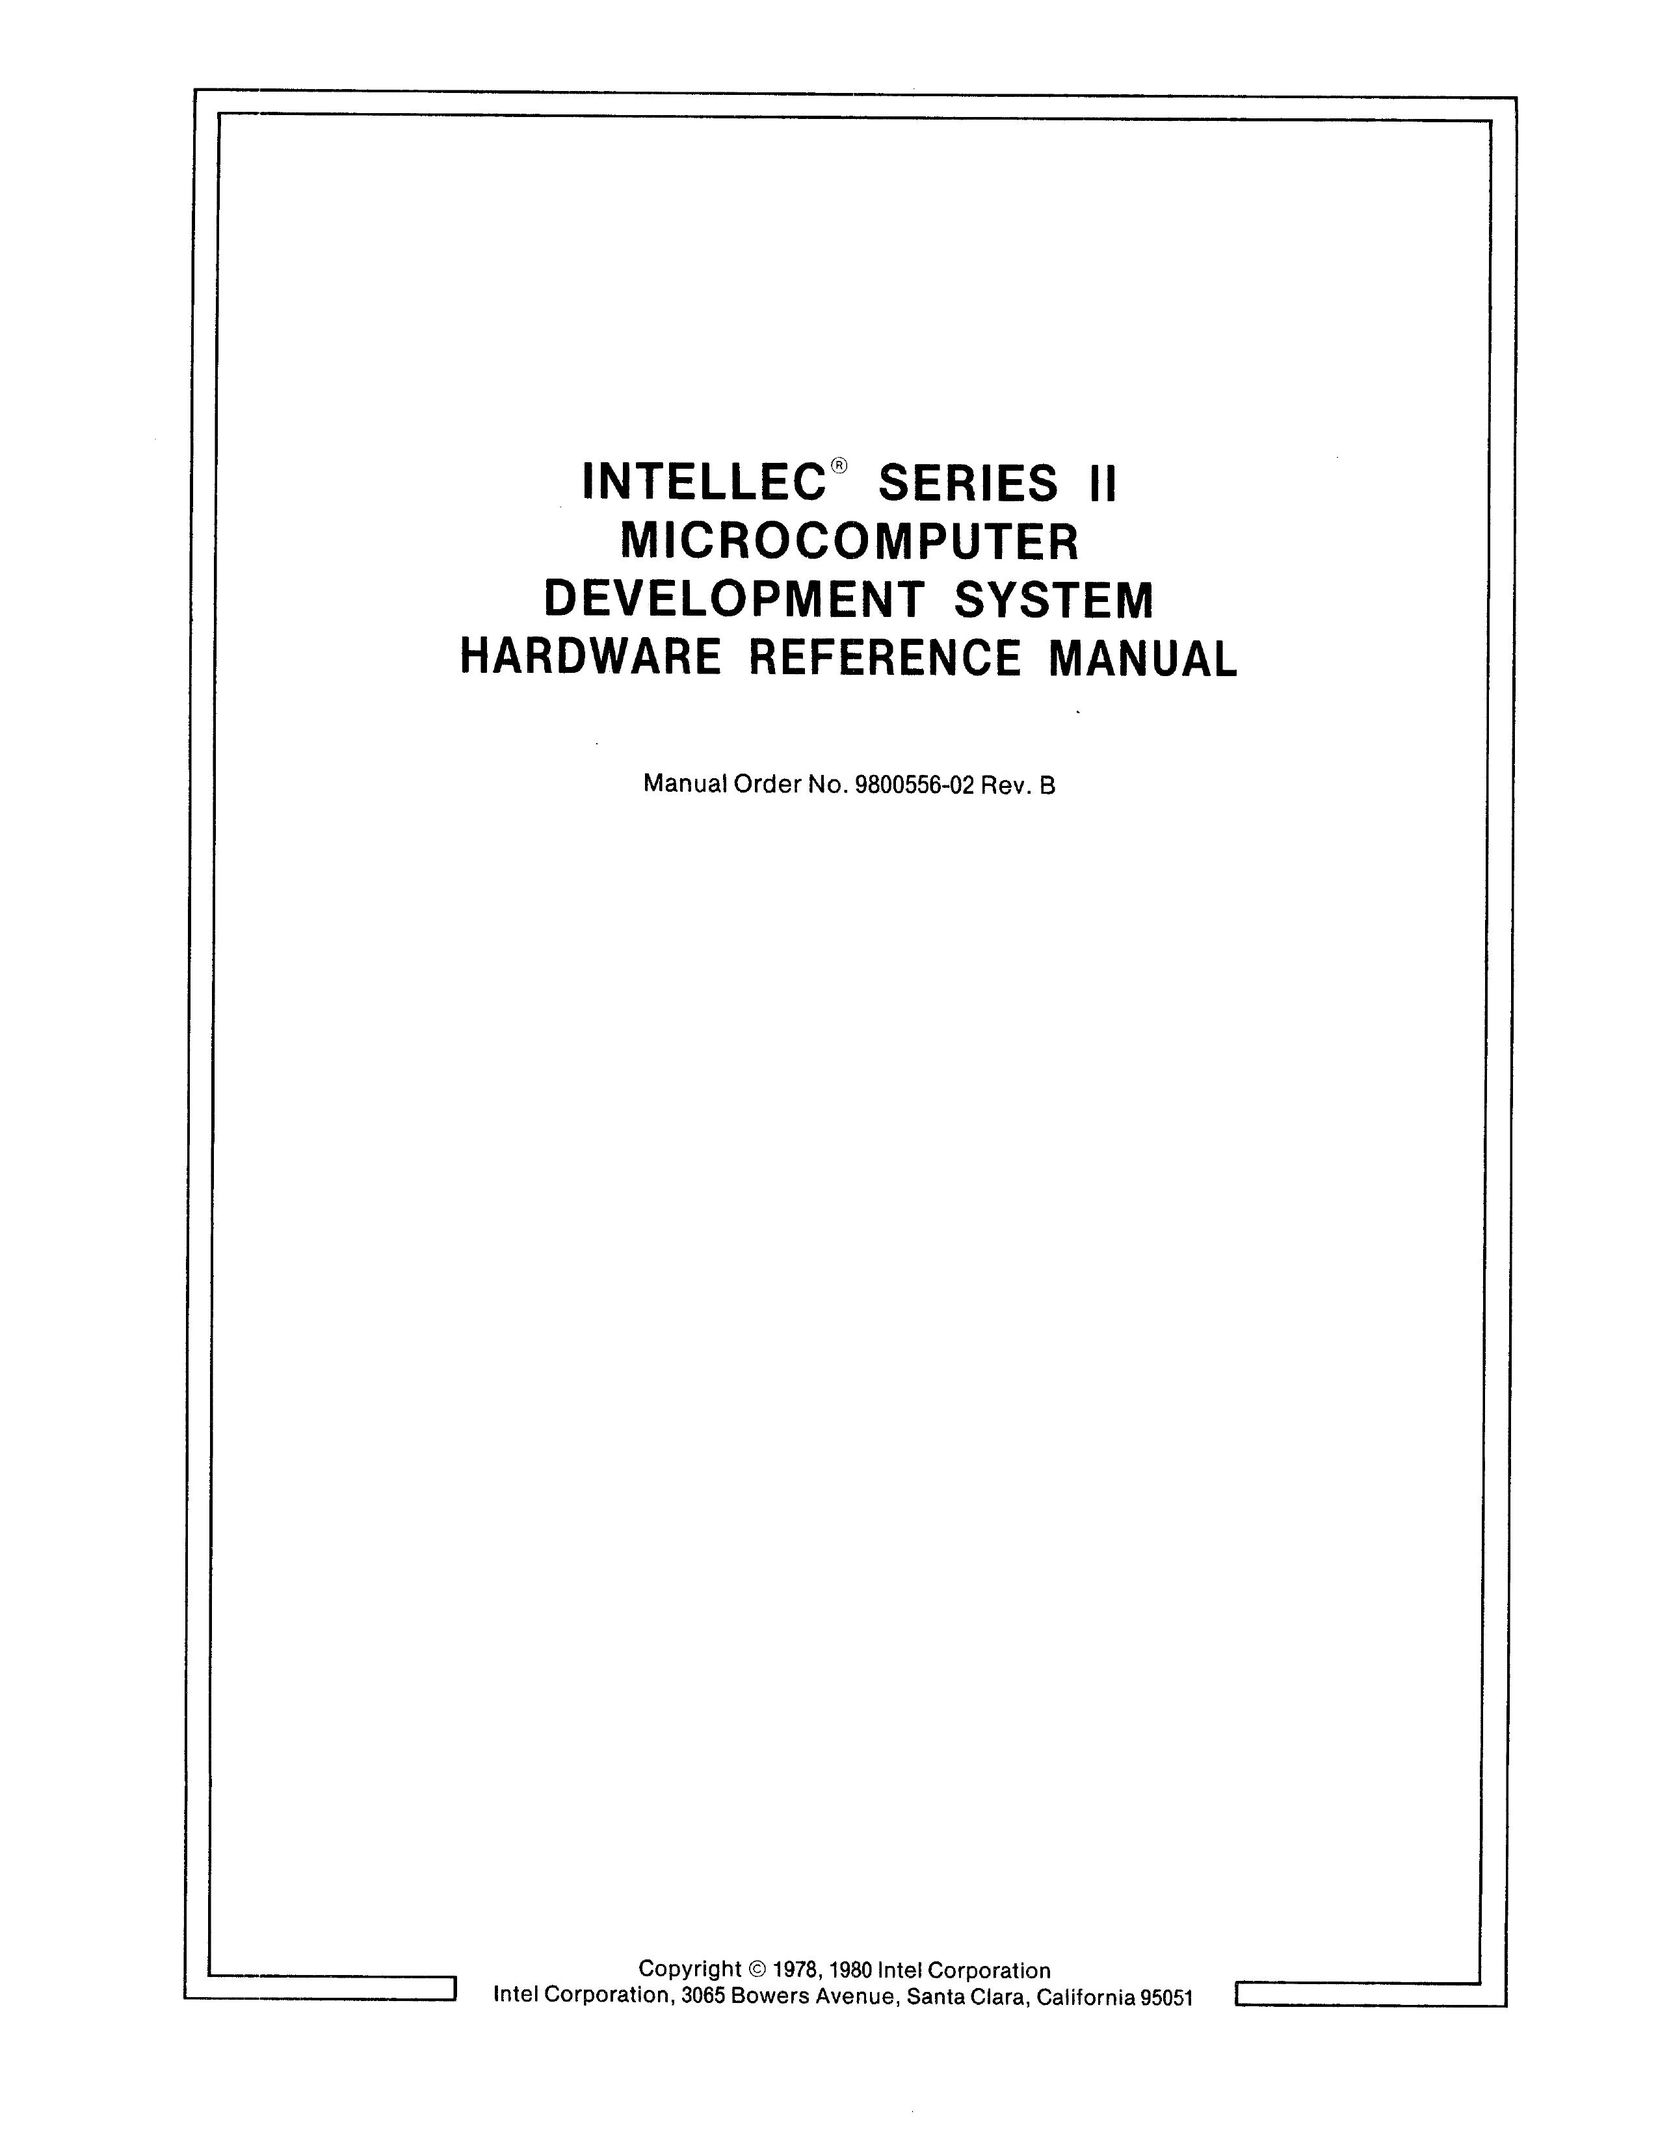 Intel microcomputer development system hardware Laptop User Manual